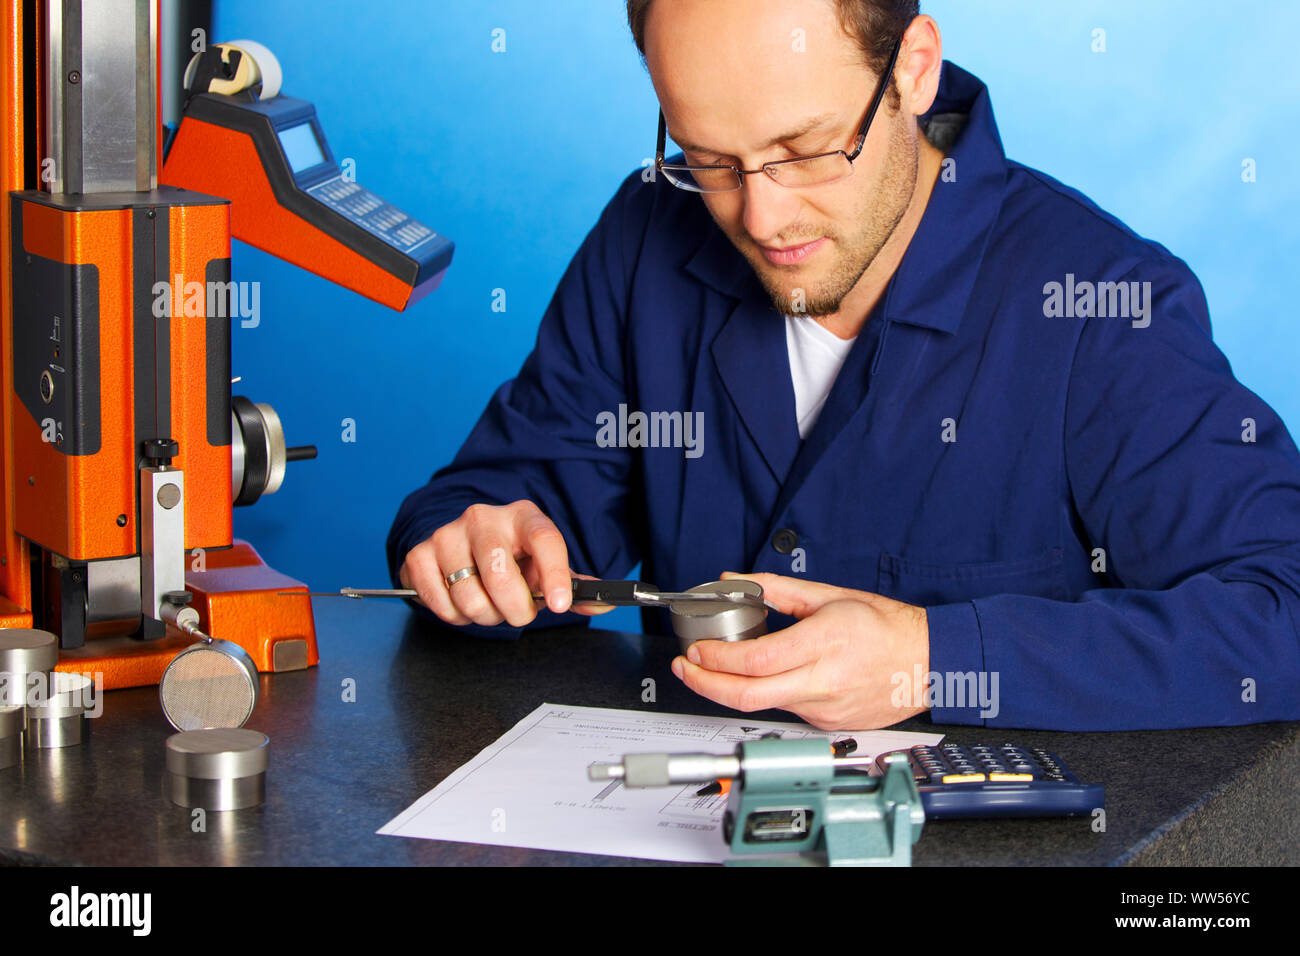 Engineer measuring with caliper Stock Photo